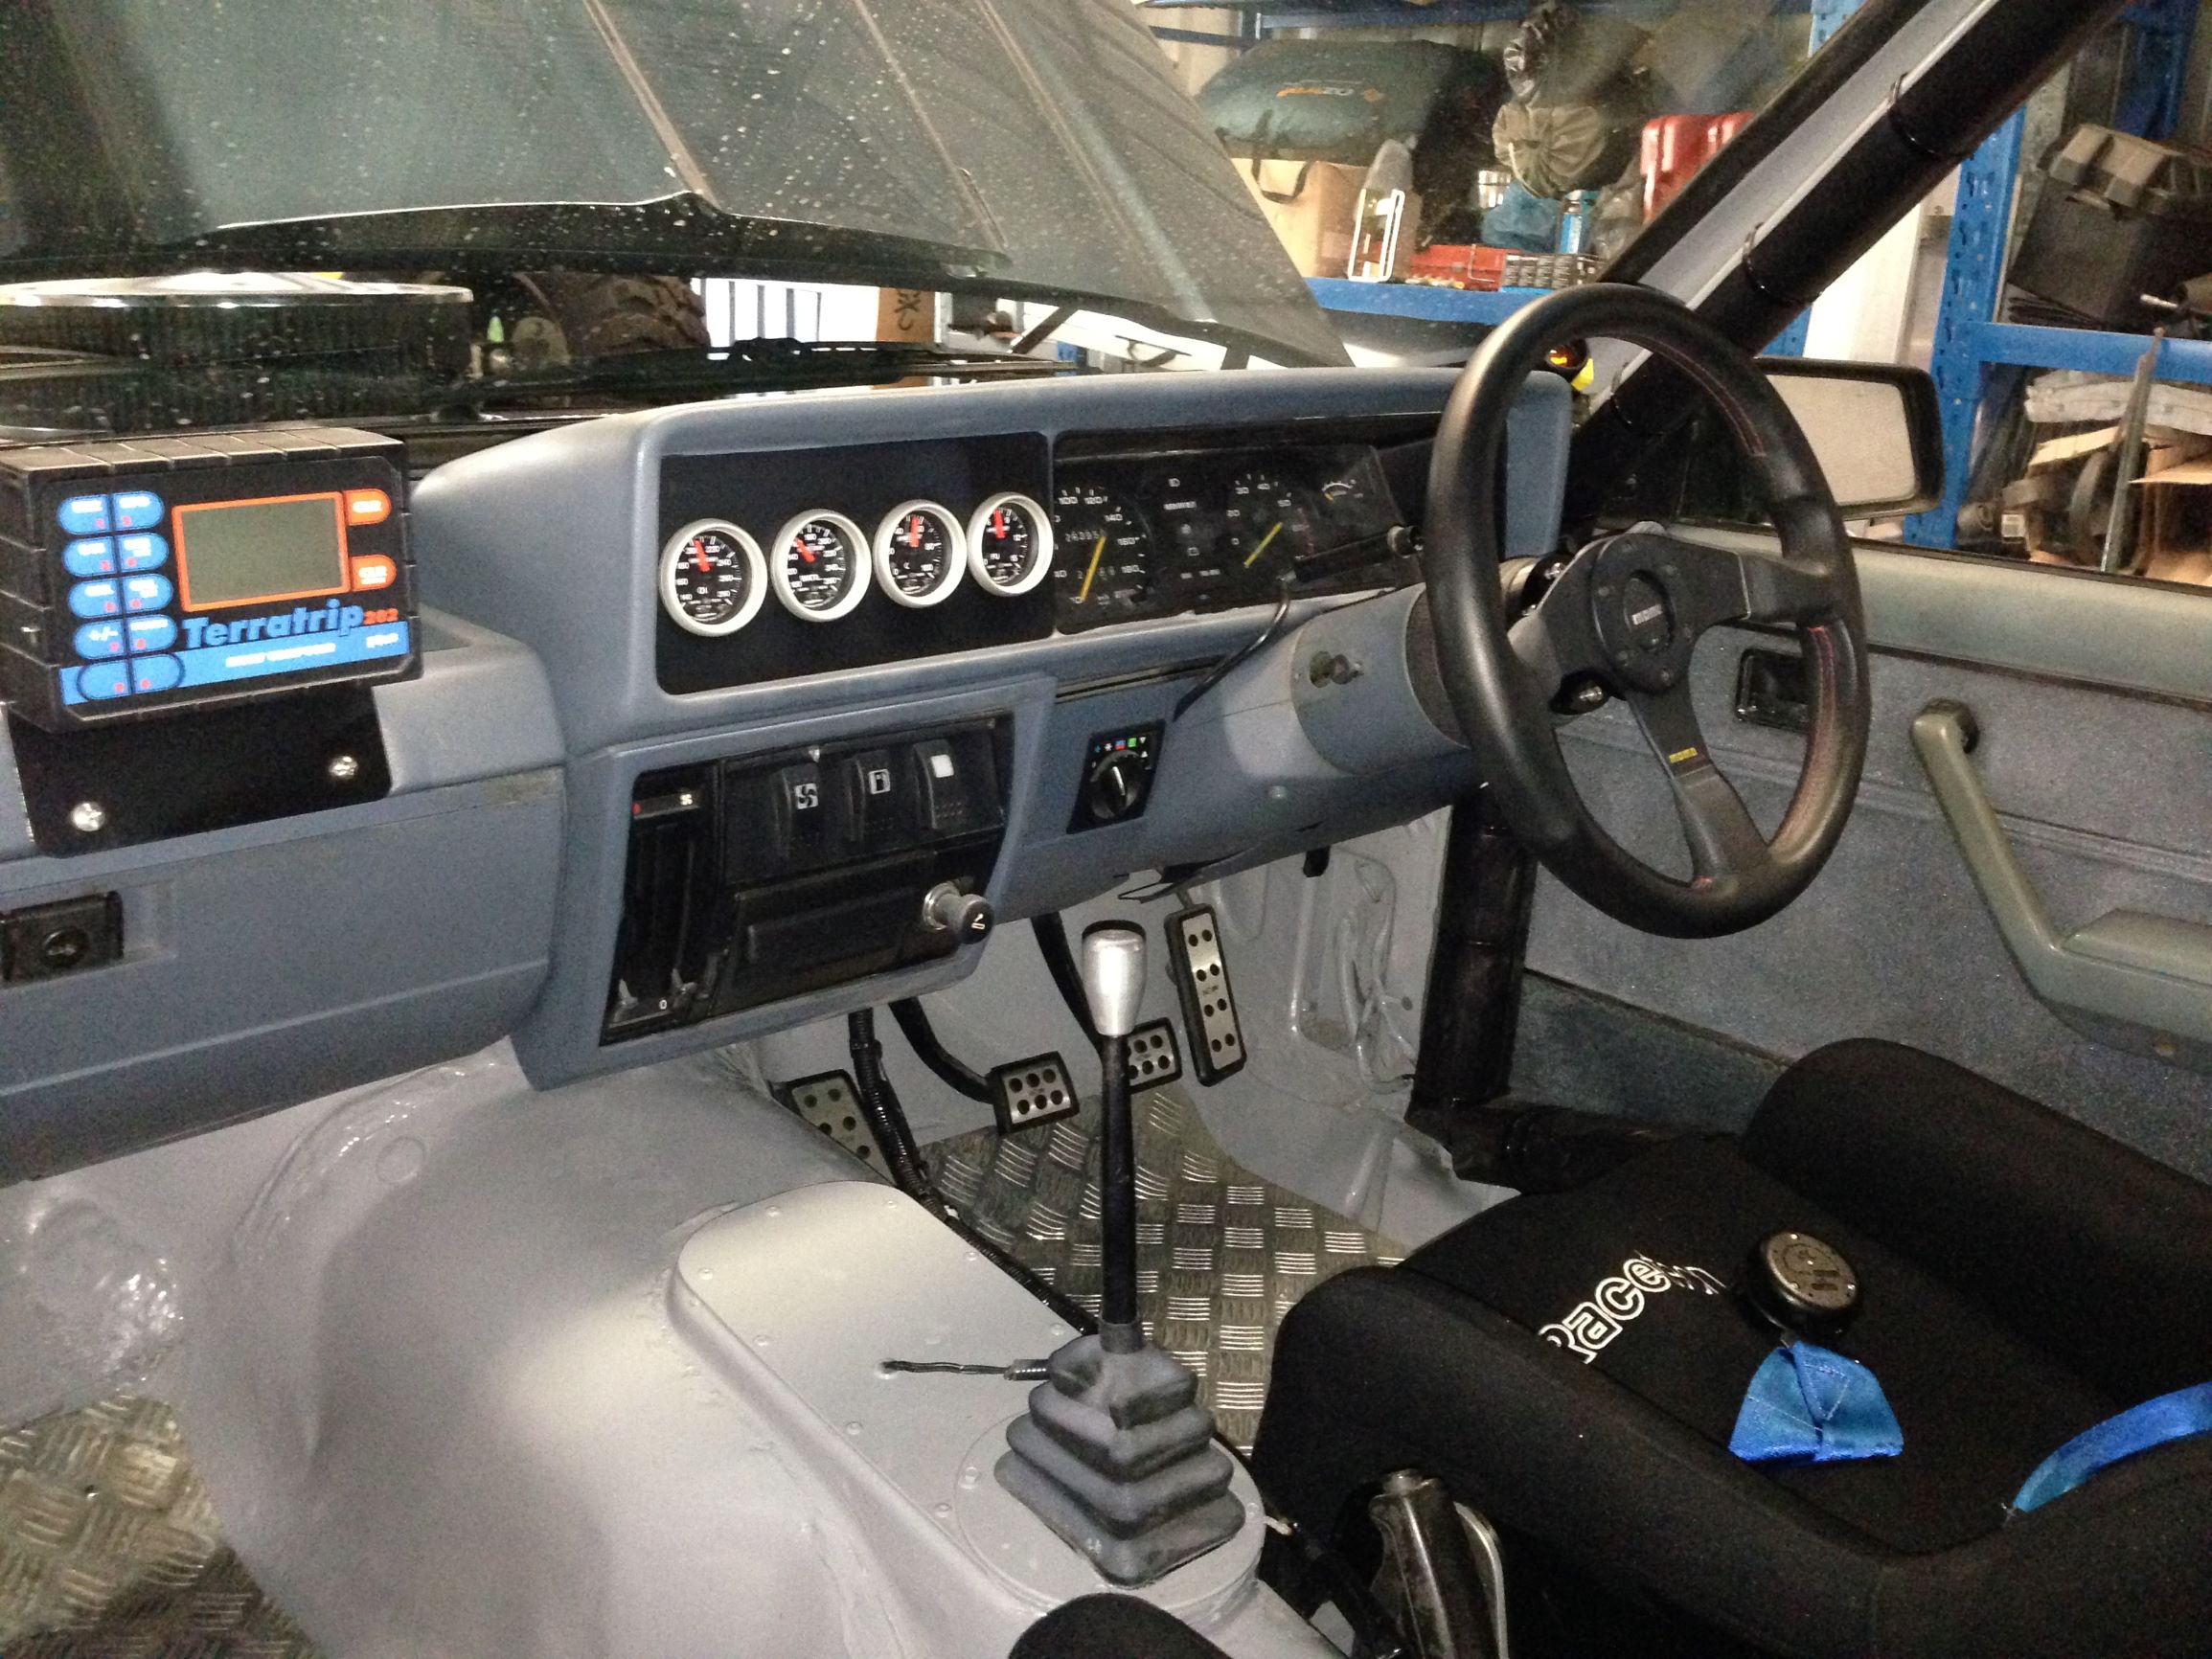 1981 Holden Commodore